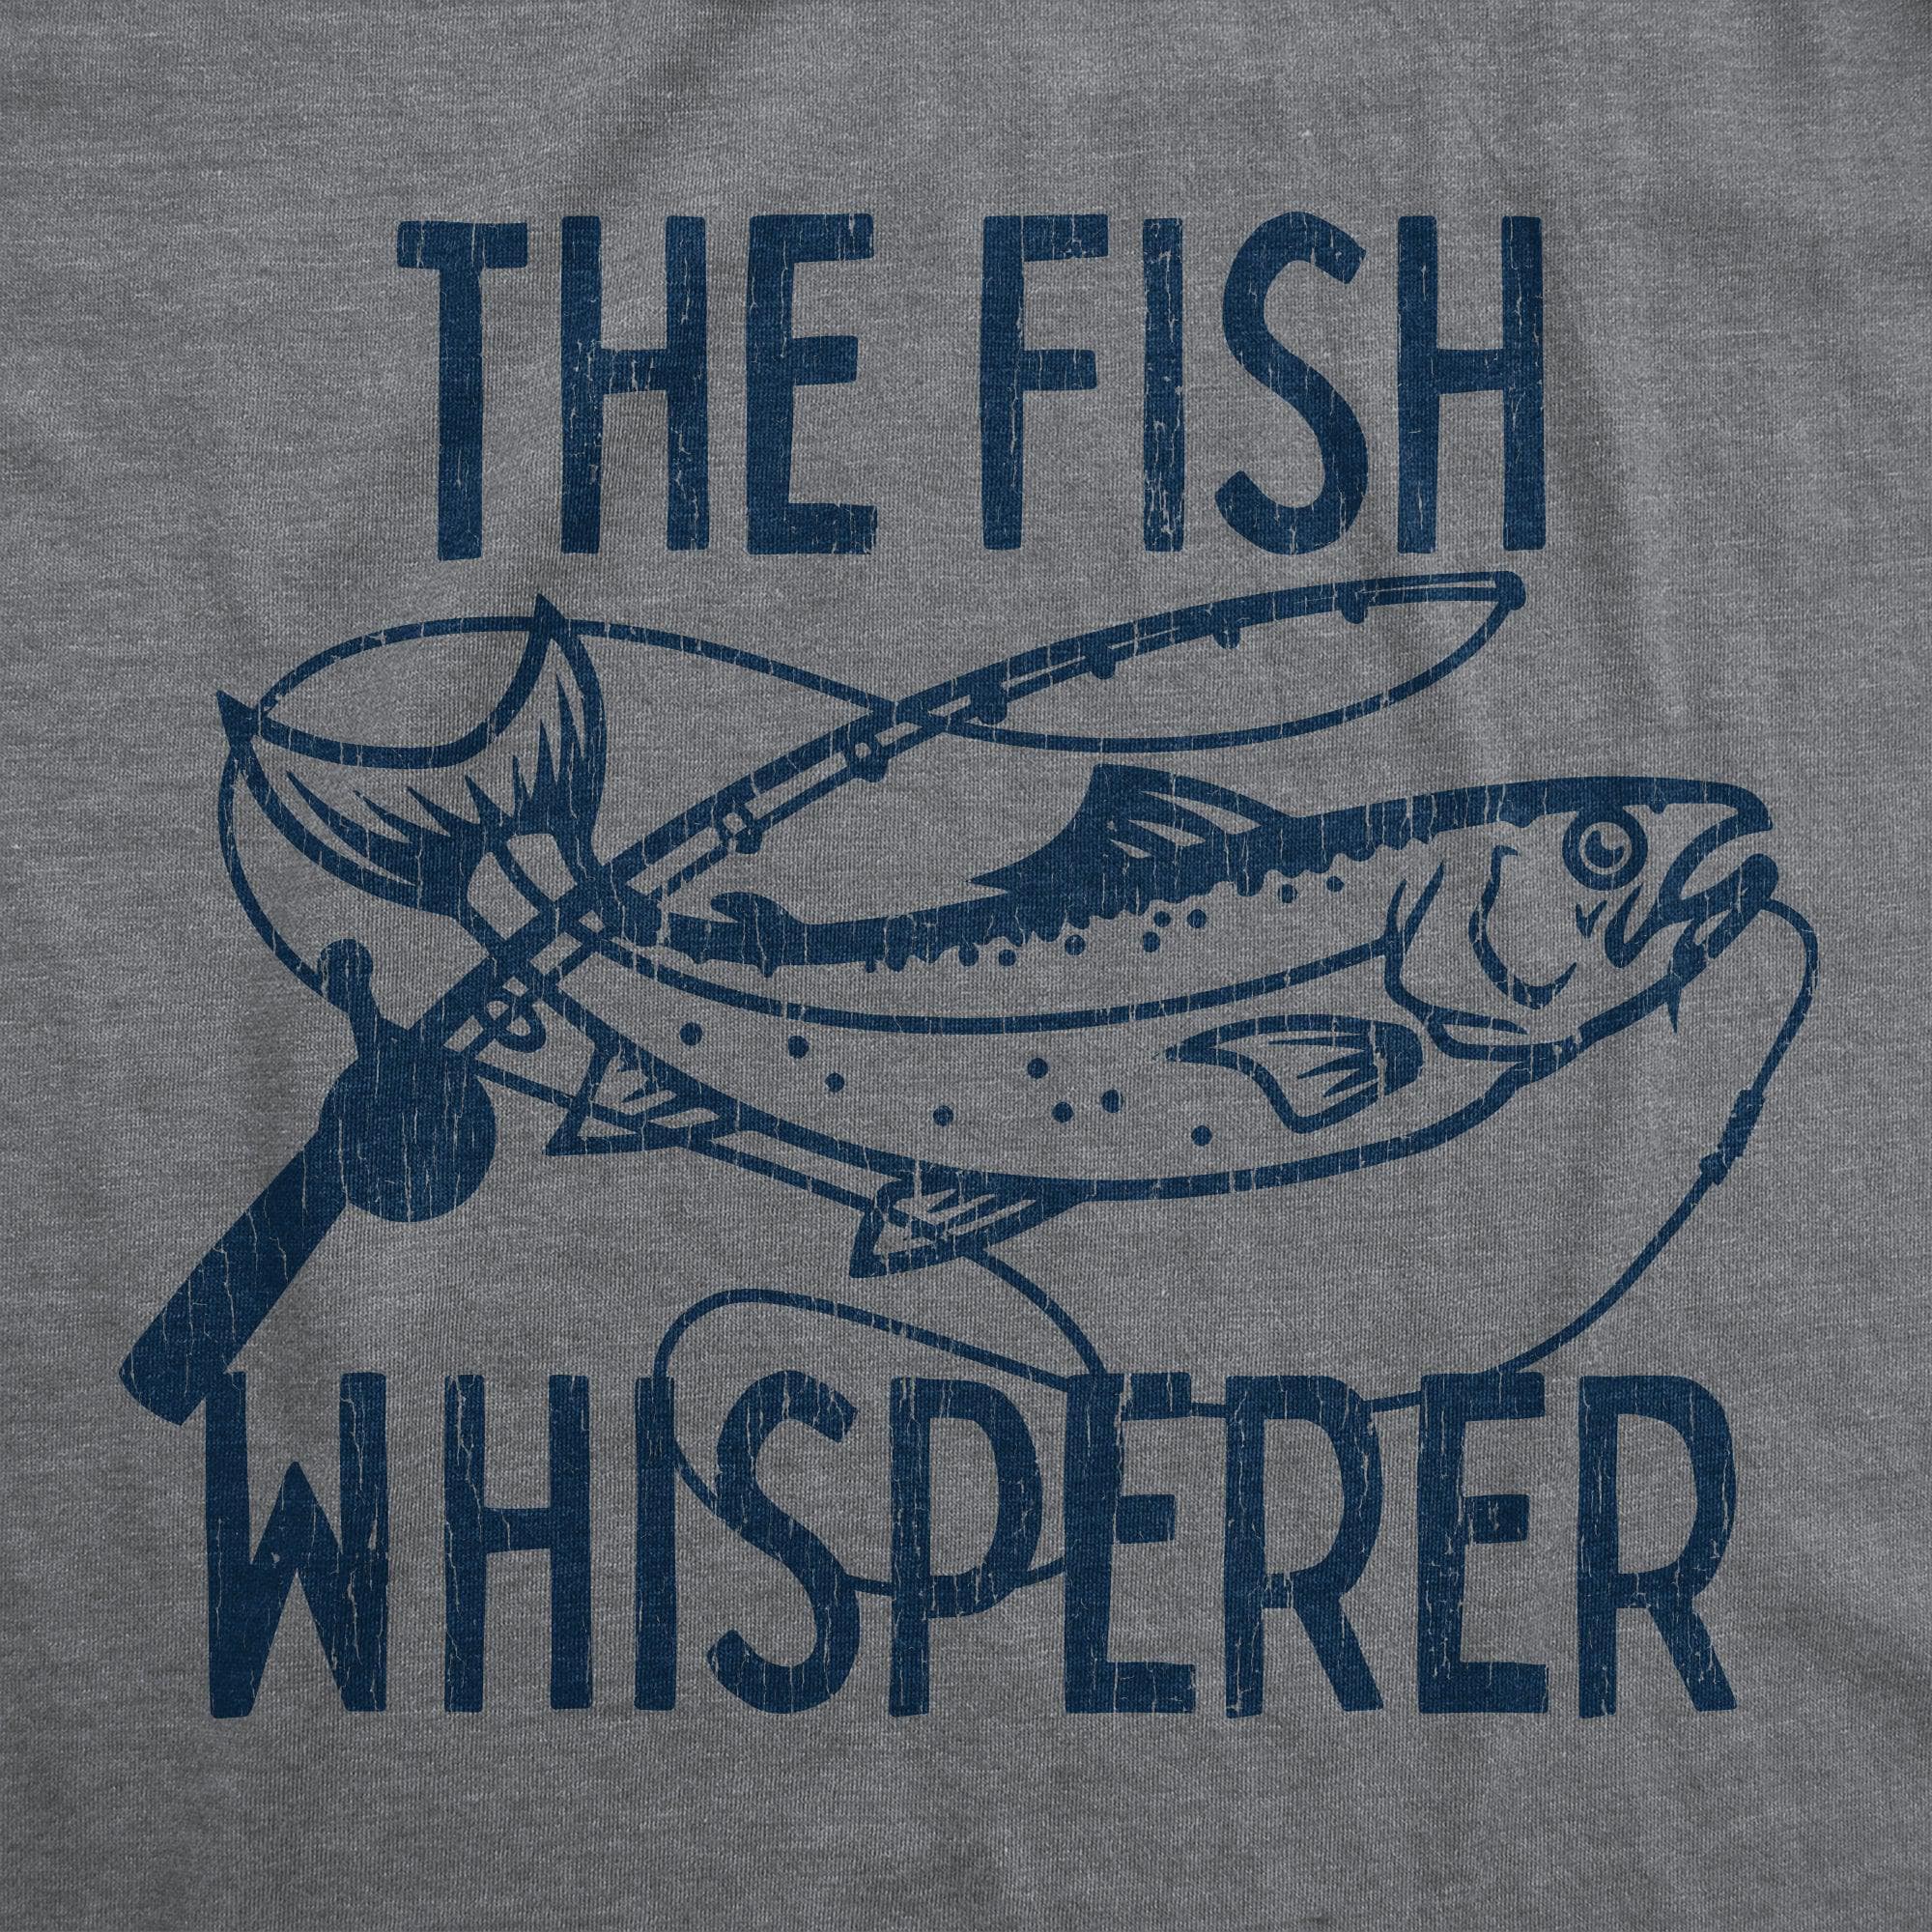 The Fish Whisperer Men's Tshirt  -  Crazy Dog T-Shirts